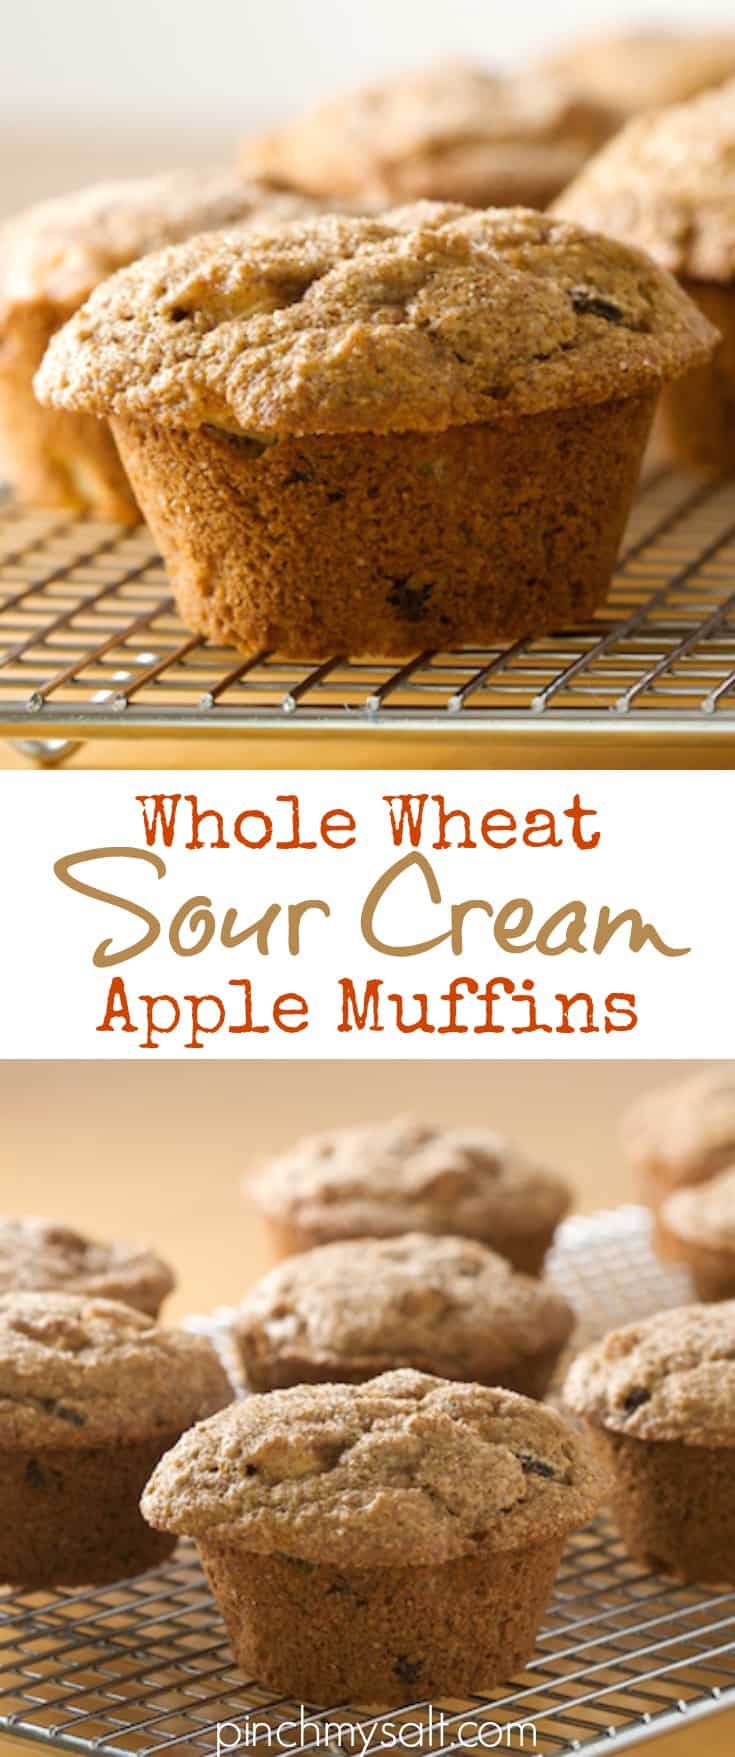 Whole Wheat Sour Cream Apple Muffins | pinchmysalt.com